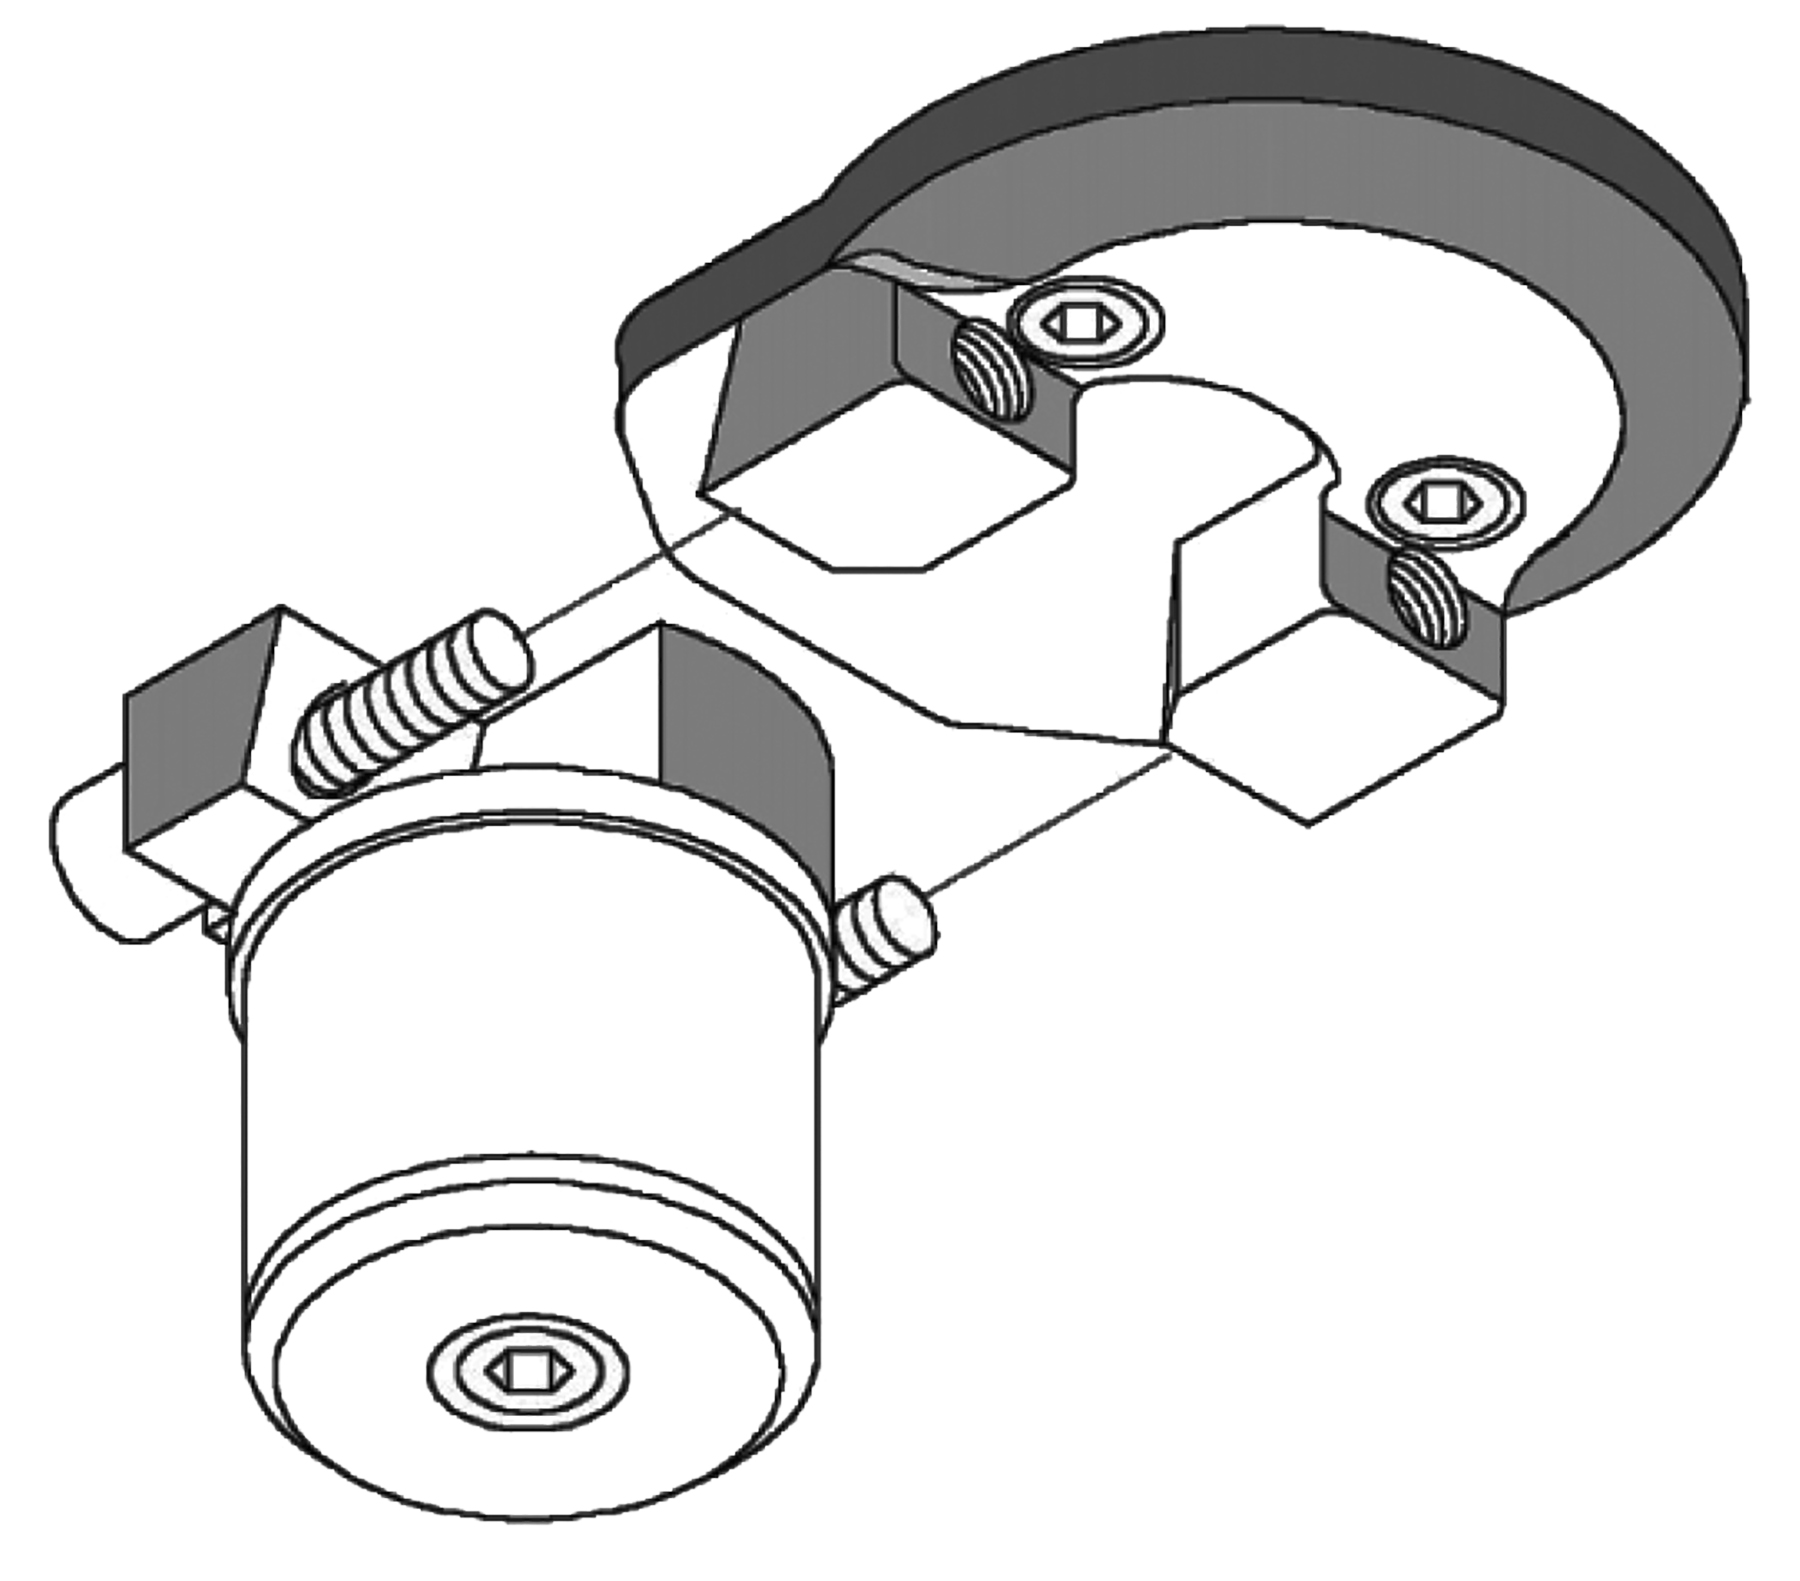 SCH-pro-drive-changing-knives-motor-illustration